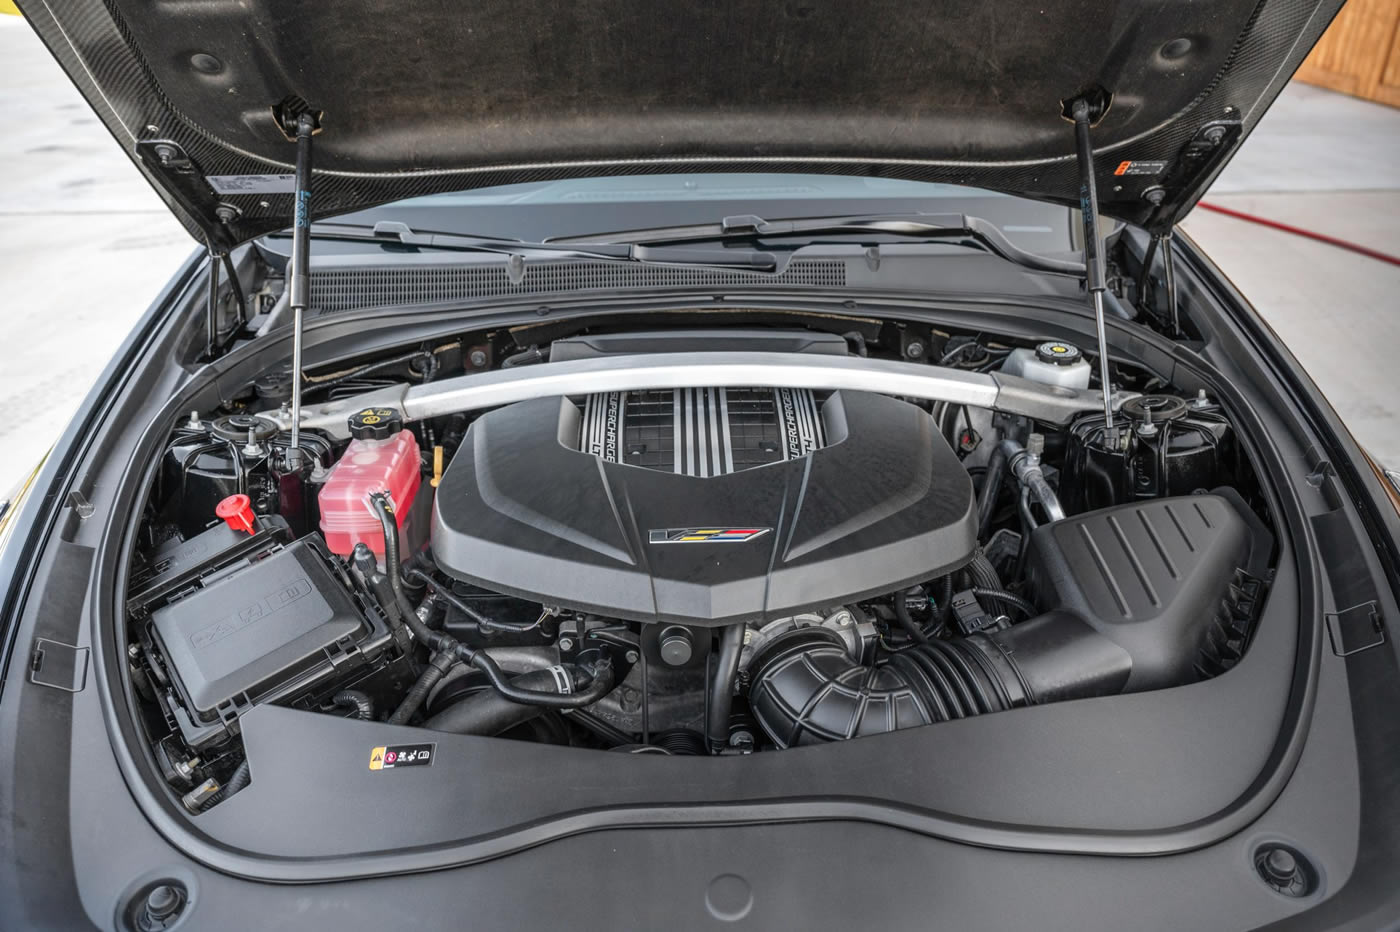 2018 Cadillac CTS-V Championship Edition in Black Raven